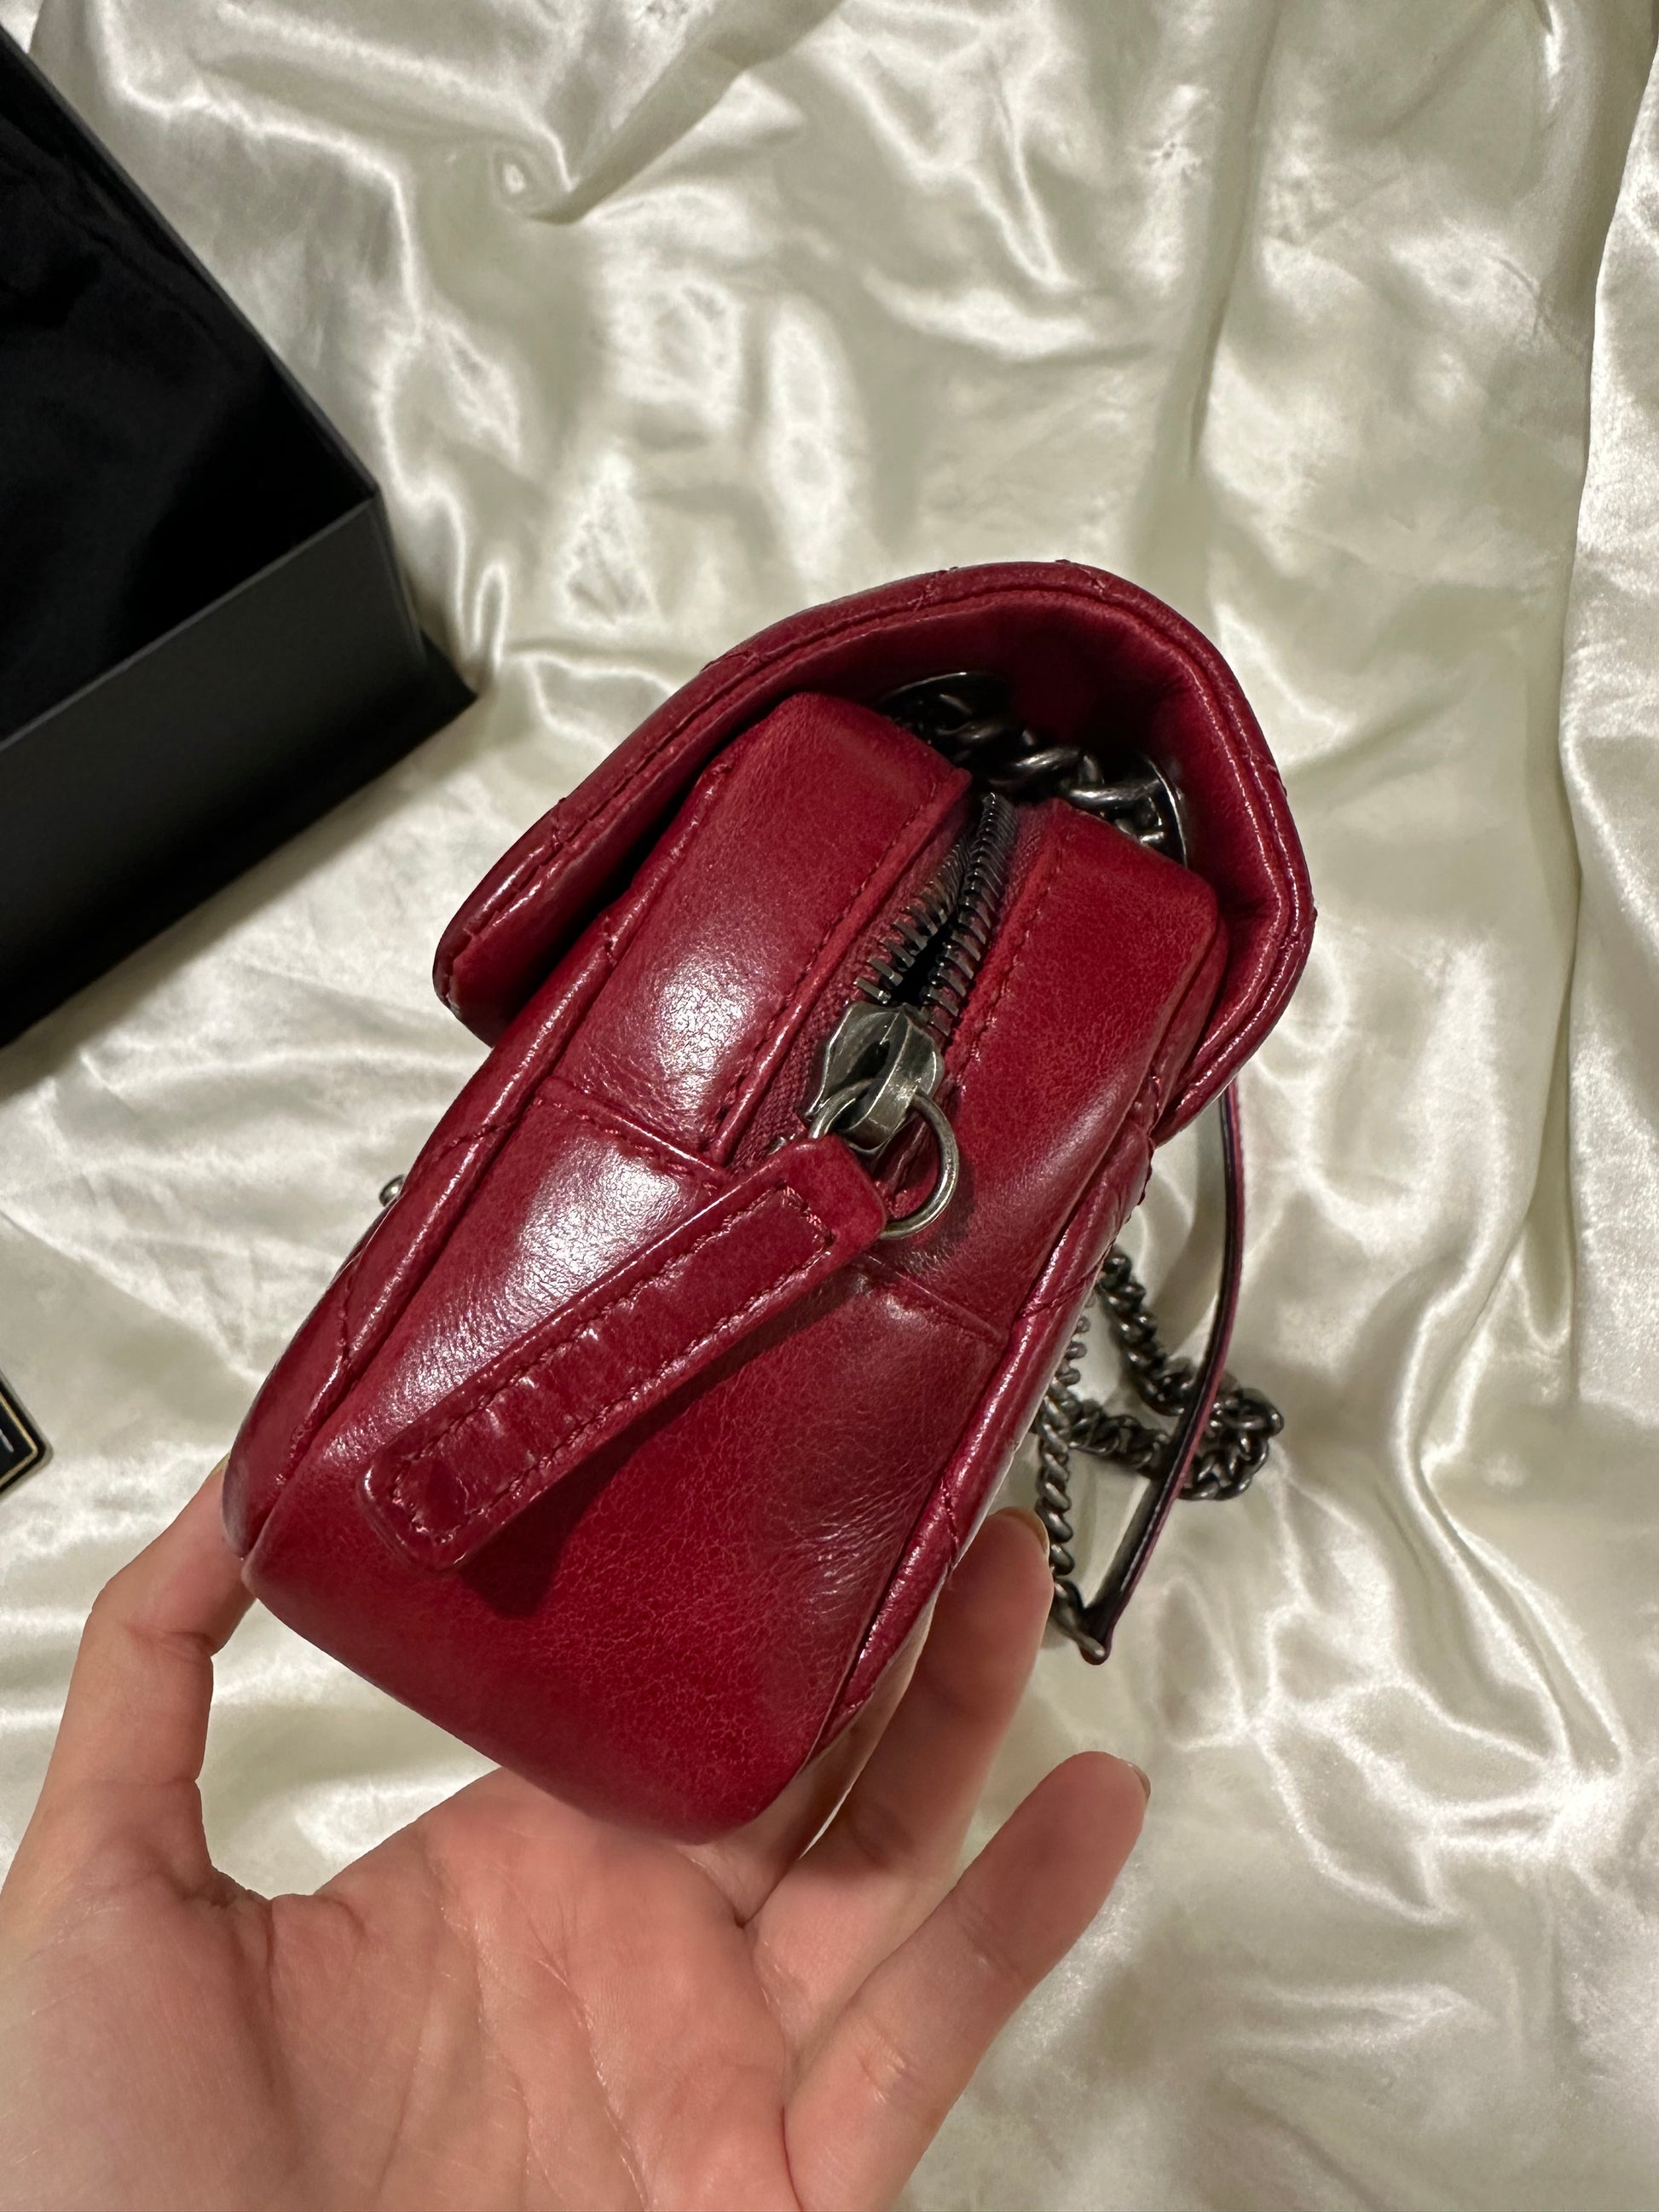 Chanel red bag酒紅色皮革包 - STAY PURE